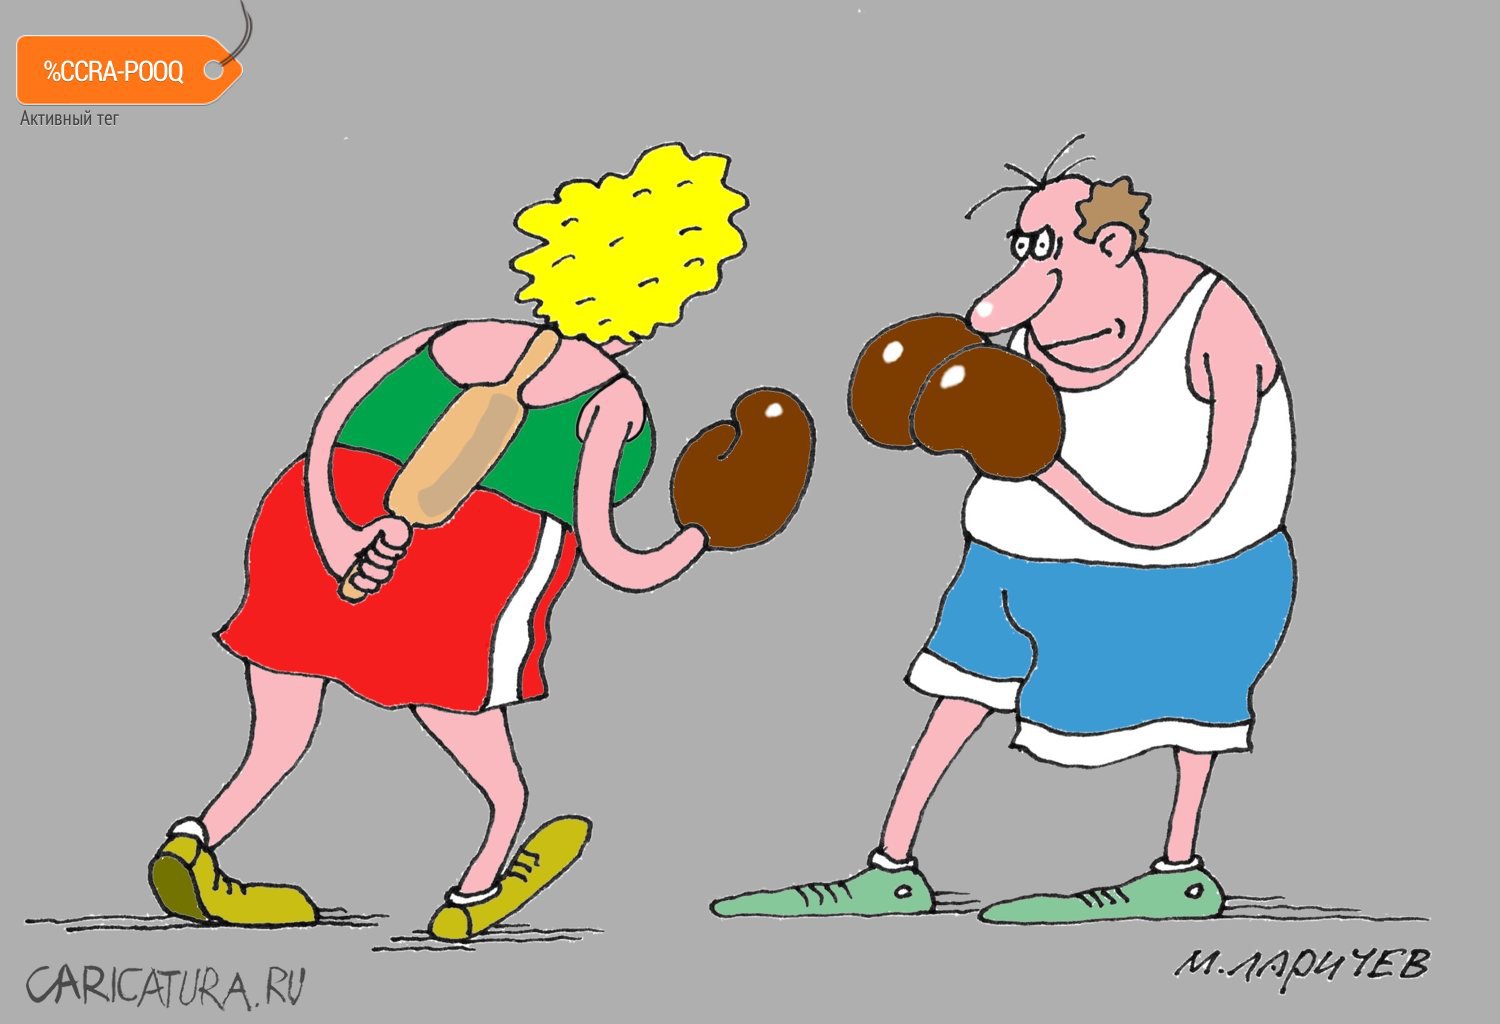 Карикатура "Коварство и любовь", Михаил Ларичев